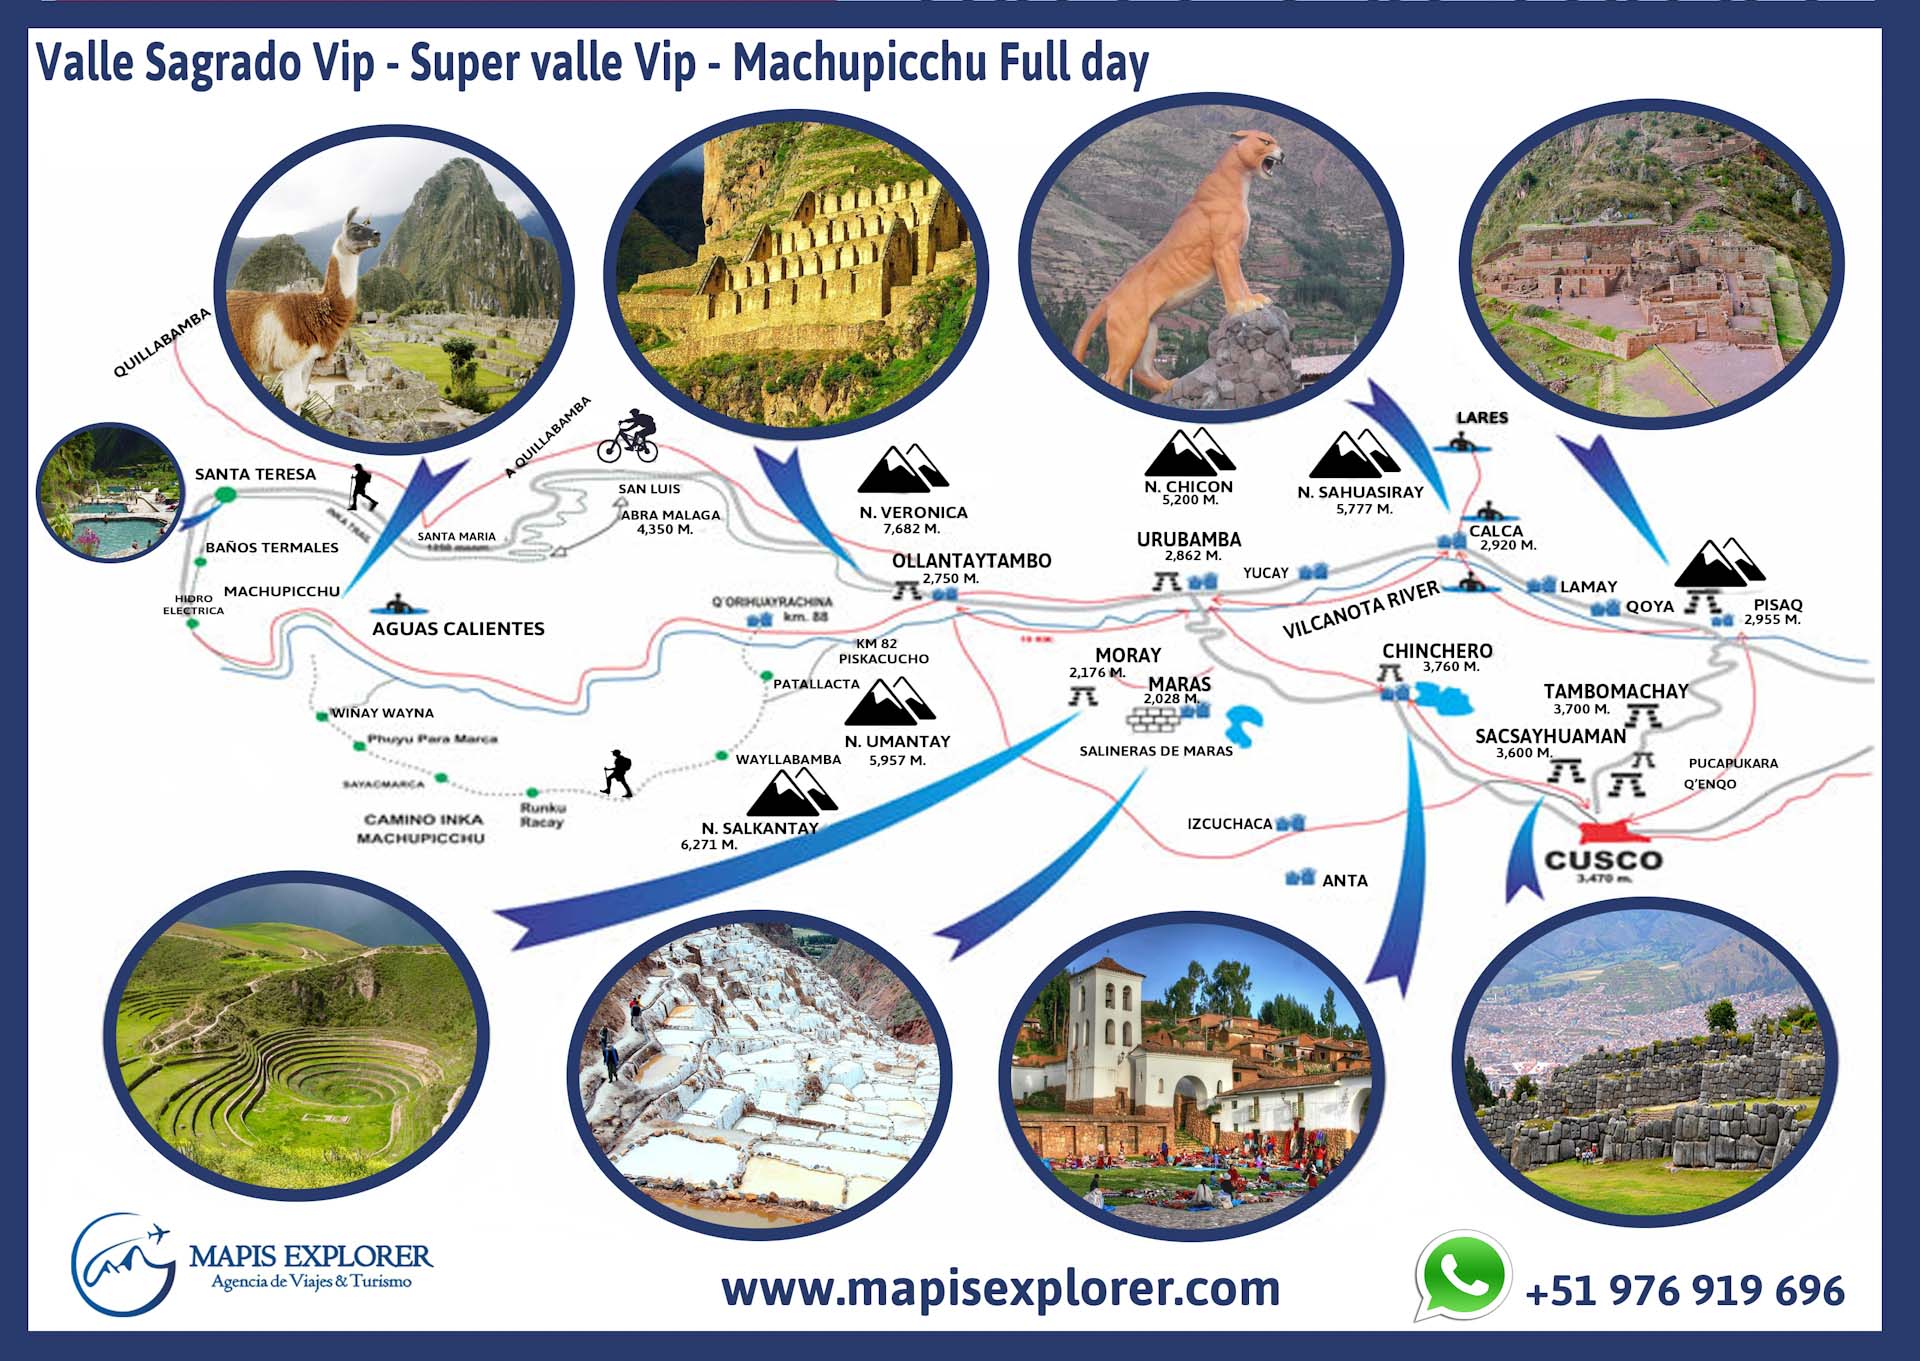 Tour Valle Sagrado Vip - Valle Sagrado Vip - Vallesagradovip - Mapisexplorer.com - Sacred Valley Vip - Vip Valle Sagrado